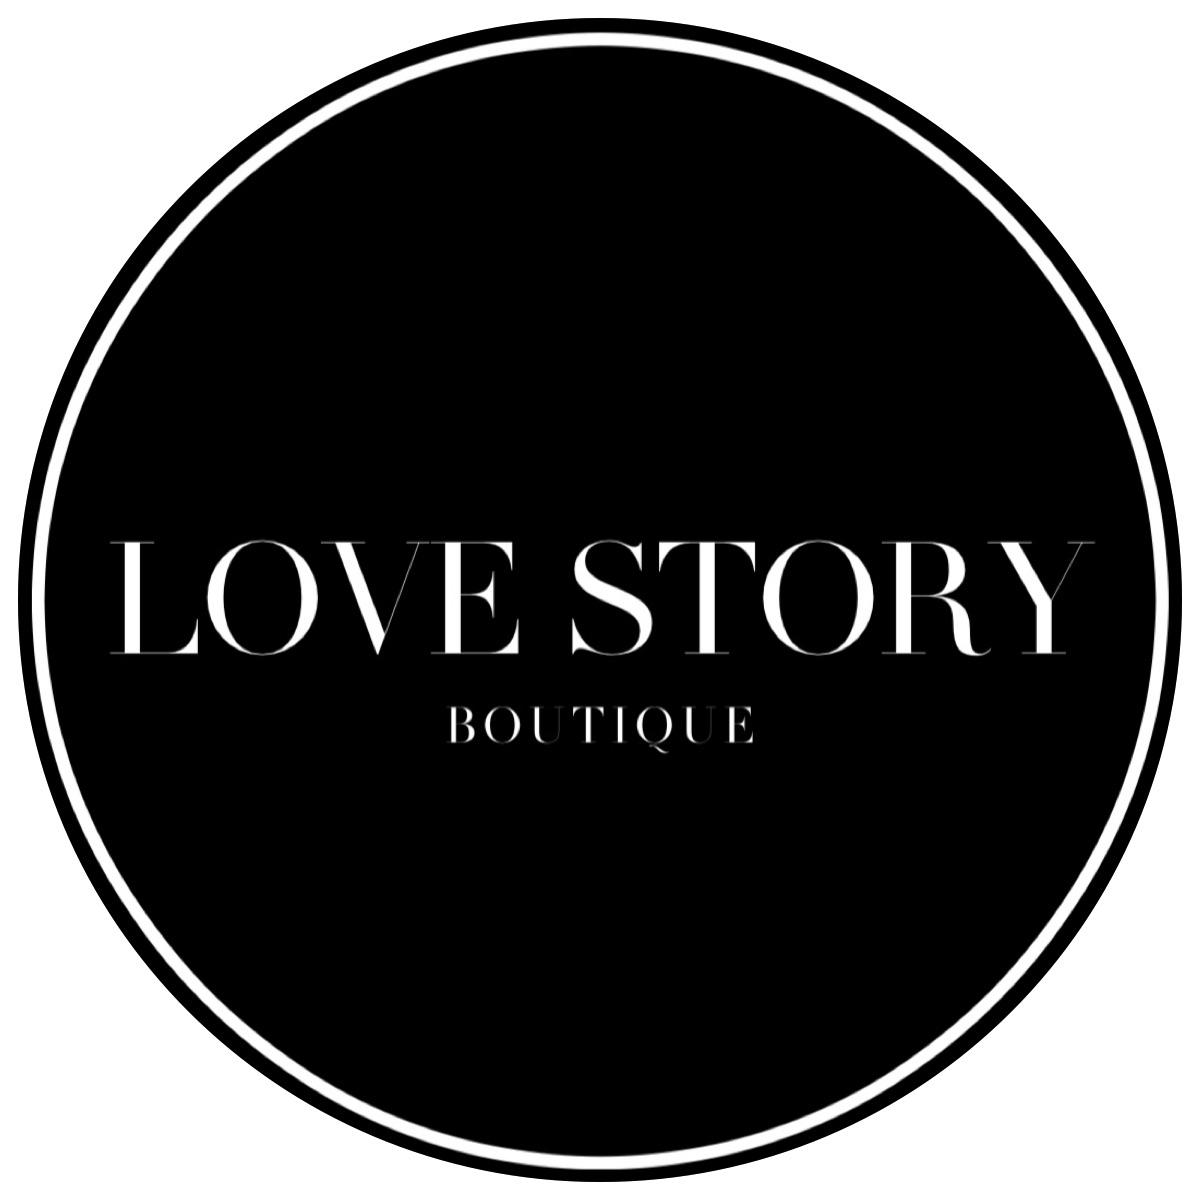 Shop Love Story's images